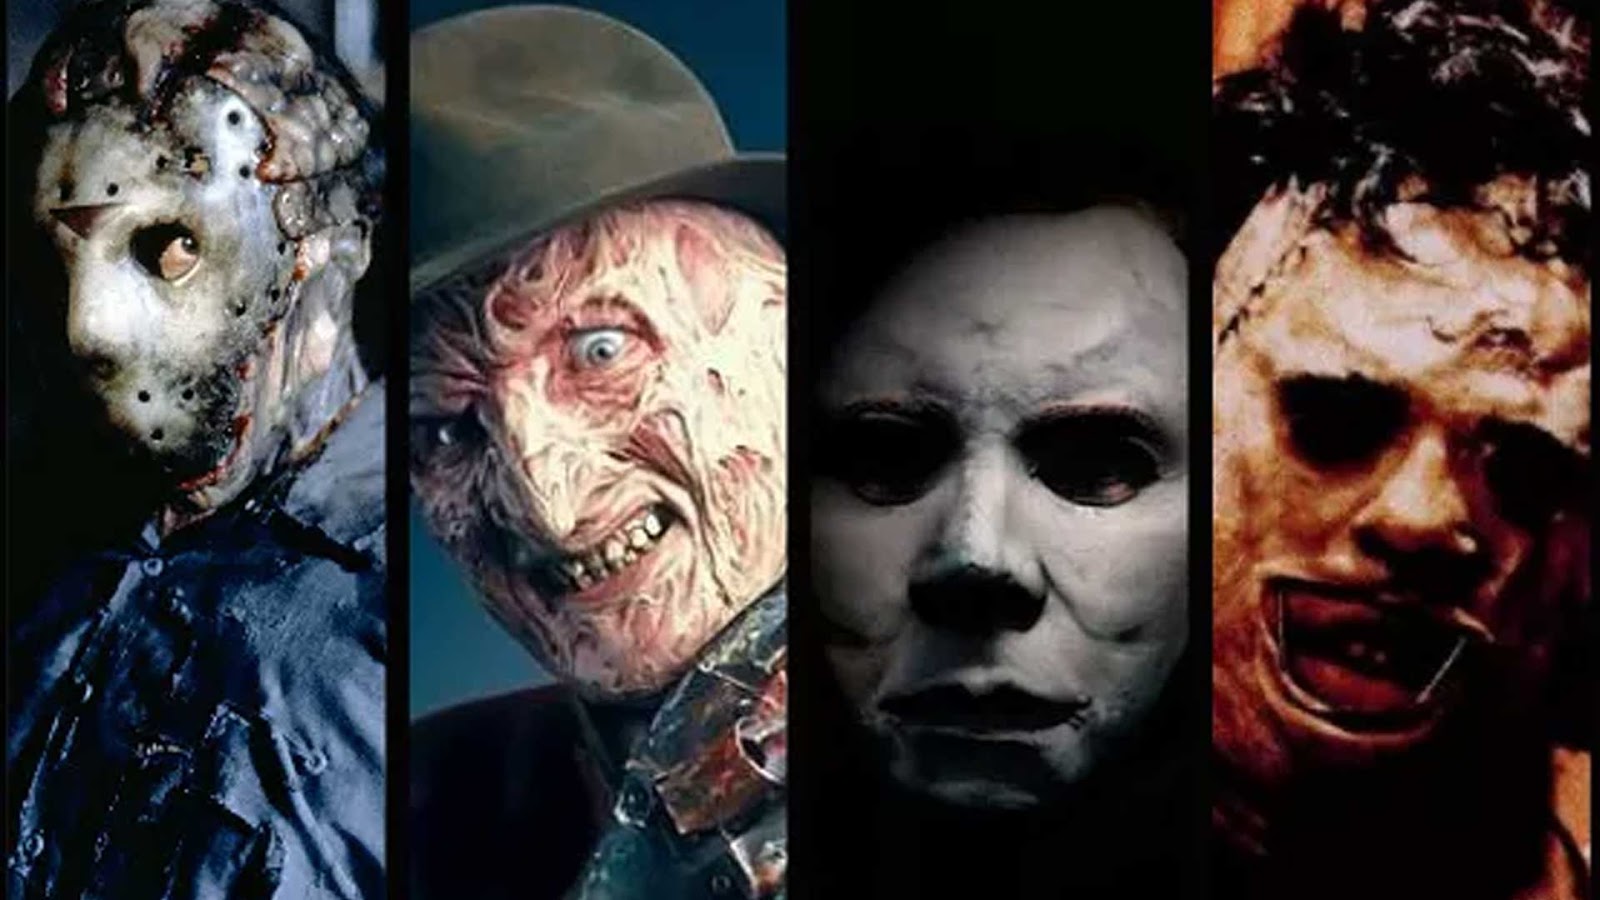 Série de filmes Halloween (Michael Myers) - Criada por Roberto